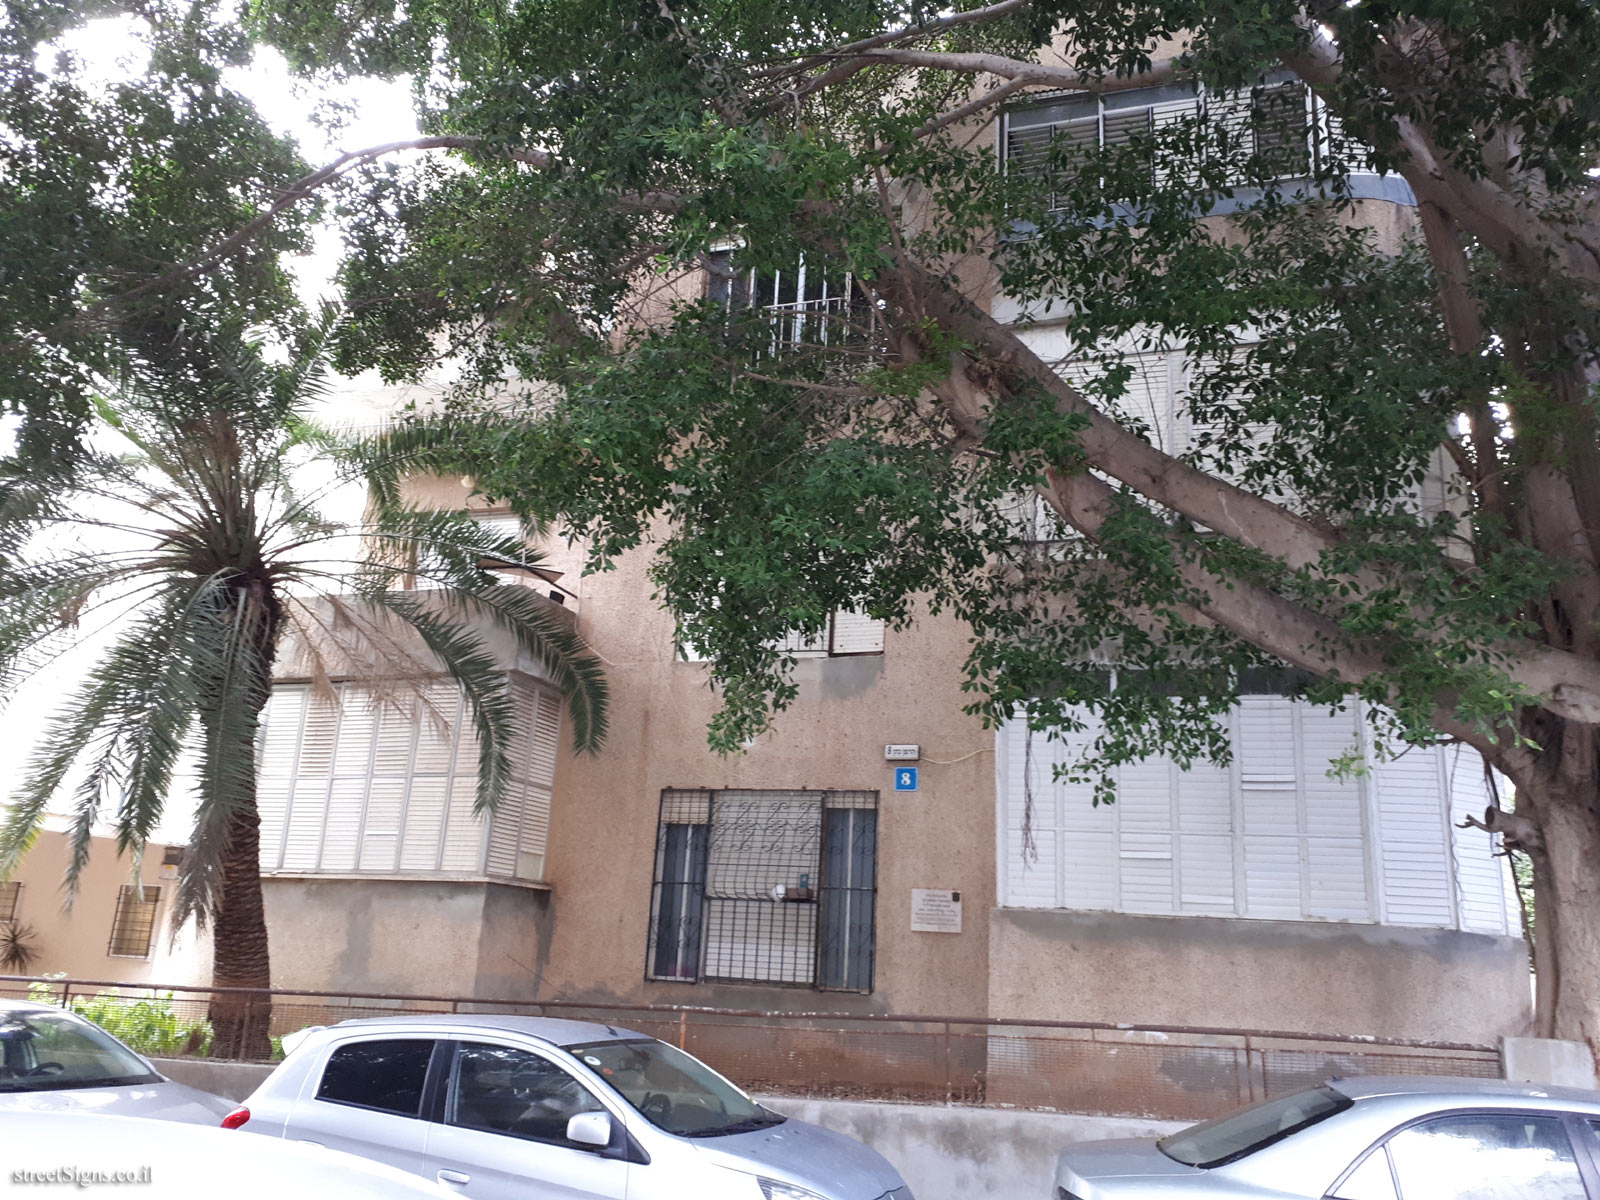 The house of Emanuel Luftglas - Herman Cohen St 8, Tel Aviv-Yafo